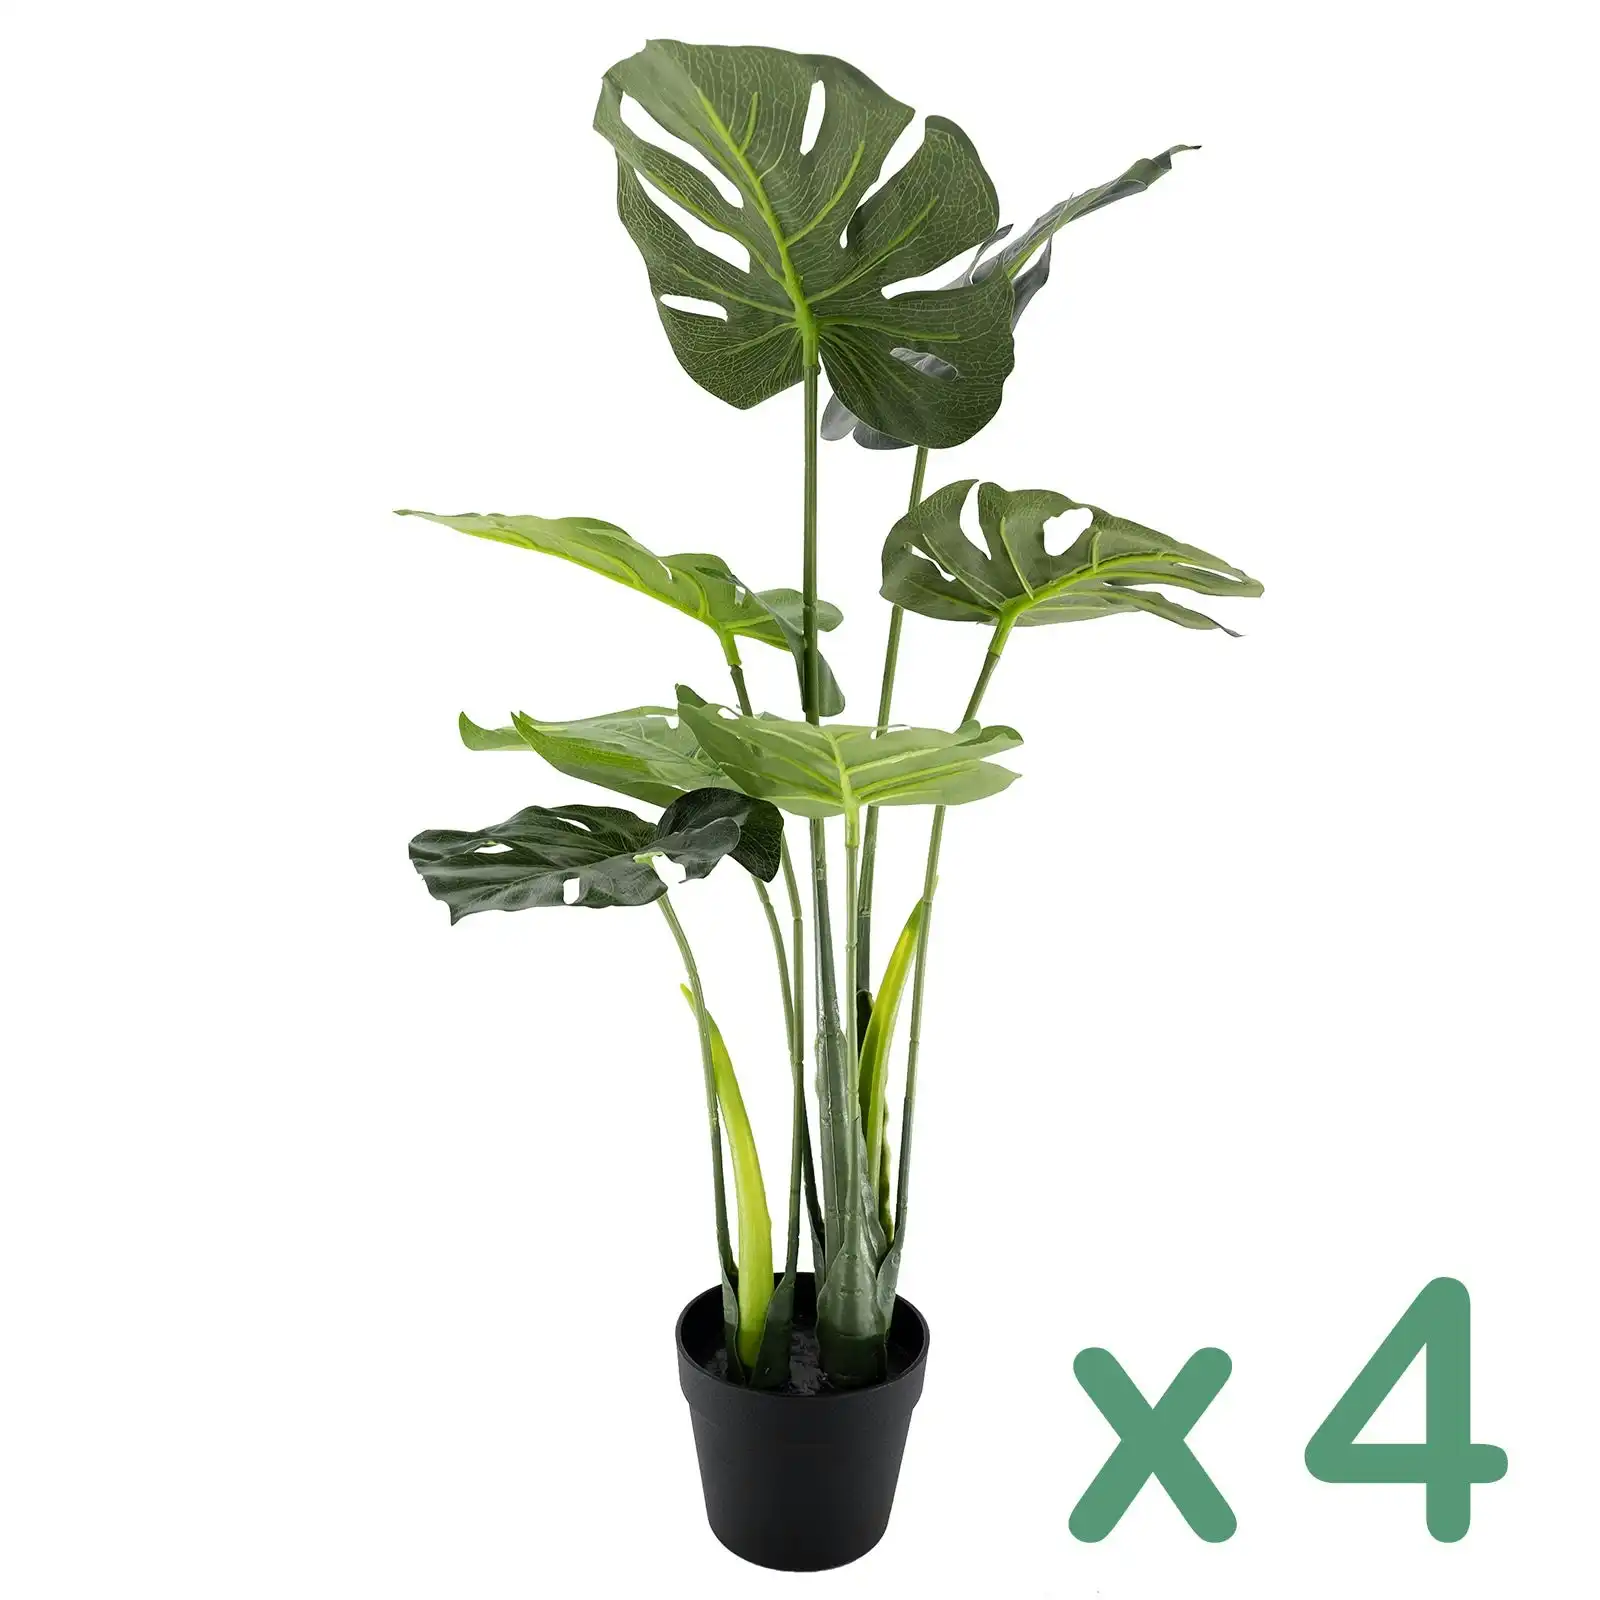 Carton of 4 - Artificial Plants - Monstera 70cm